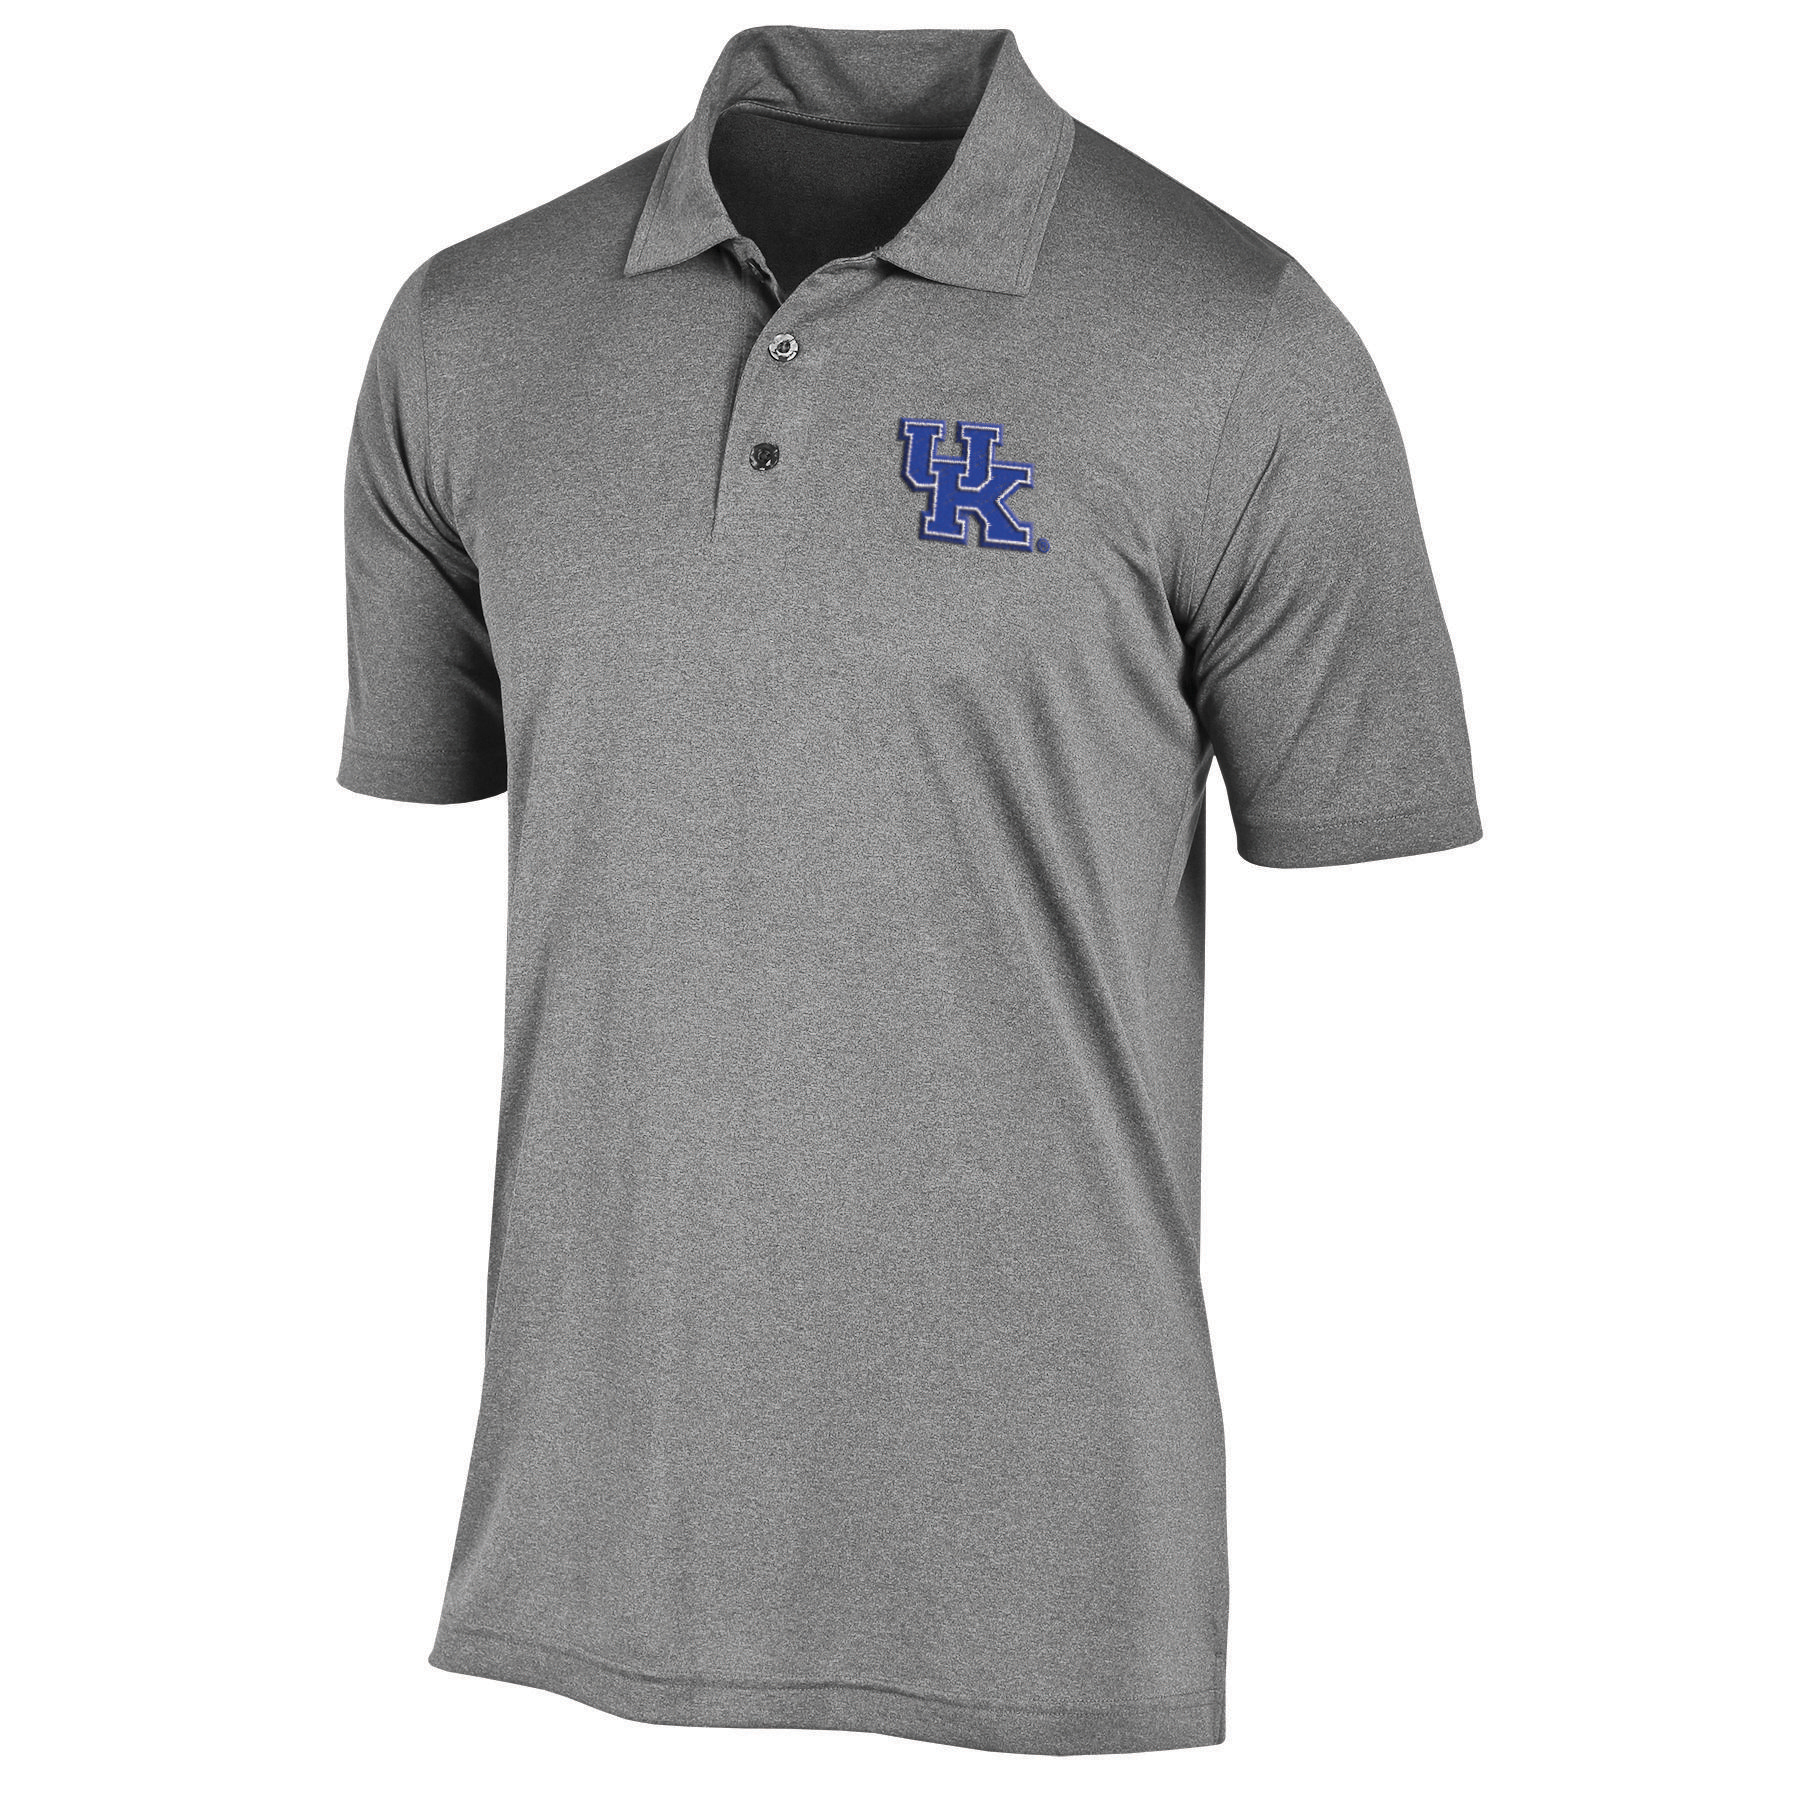 NCAA Men's Polo Shirt - University of Kentucky Wildcats